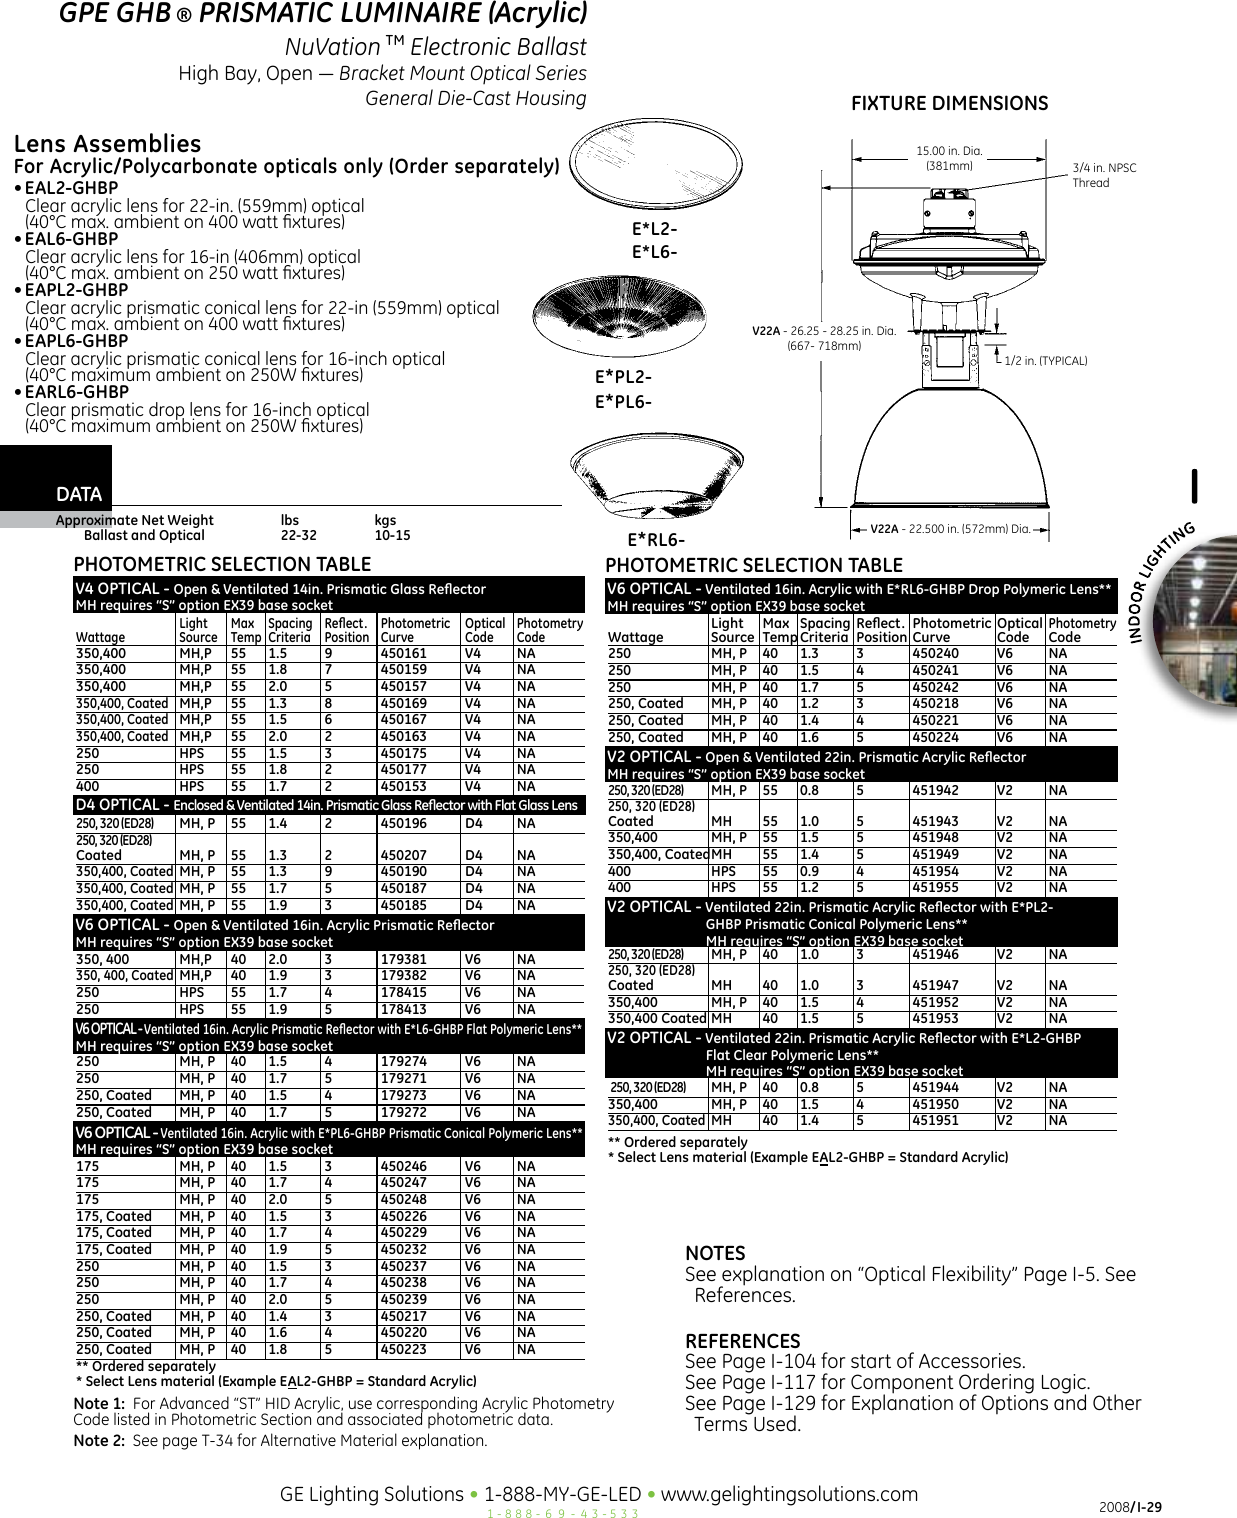 Page 2 of 2 - Ge-Appliances Ge-Gp5-Data-Sheet- GE Indoor Lighting Fixtures High Bay GPE GHB Prismatic Luminaire Data Sheet |  Ge-gp5-data-sheet